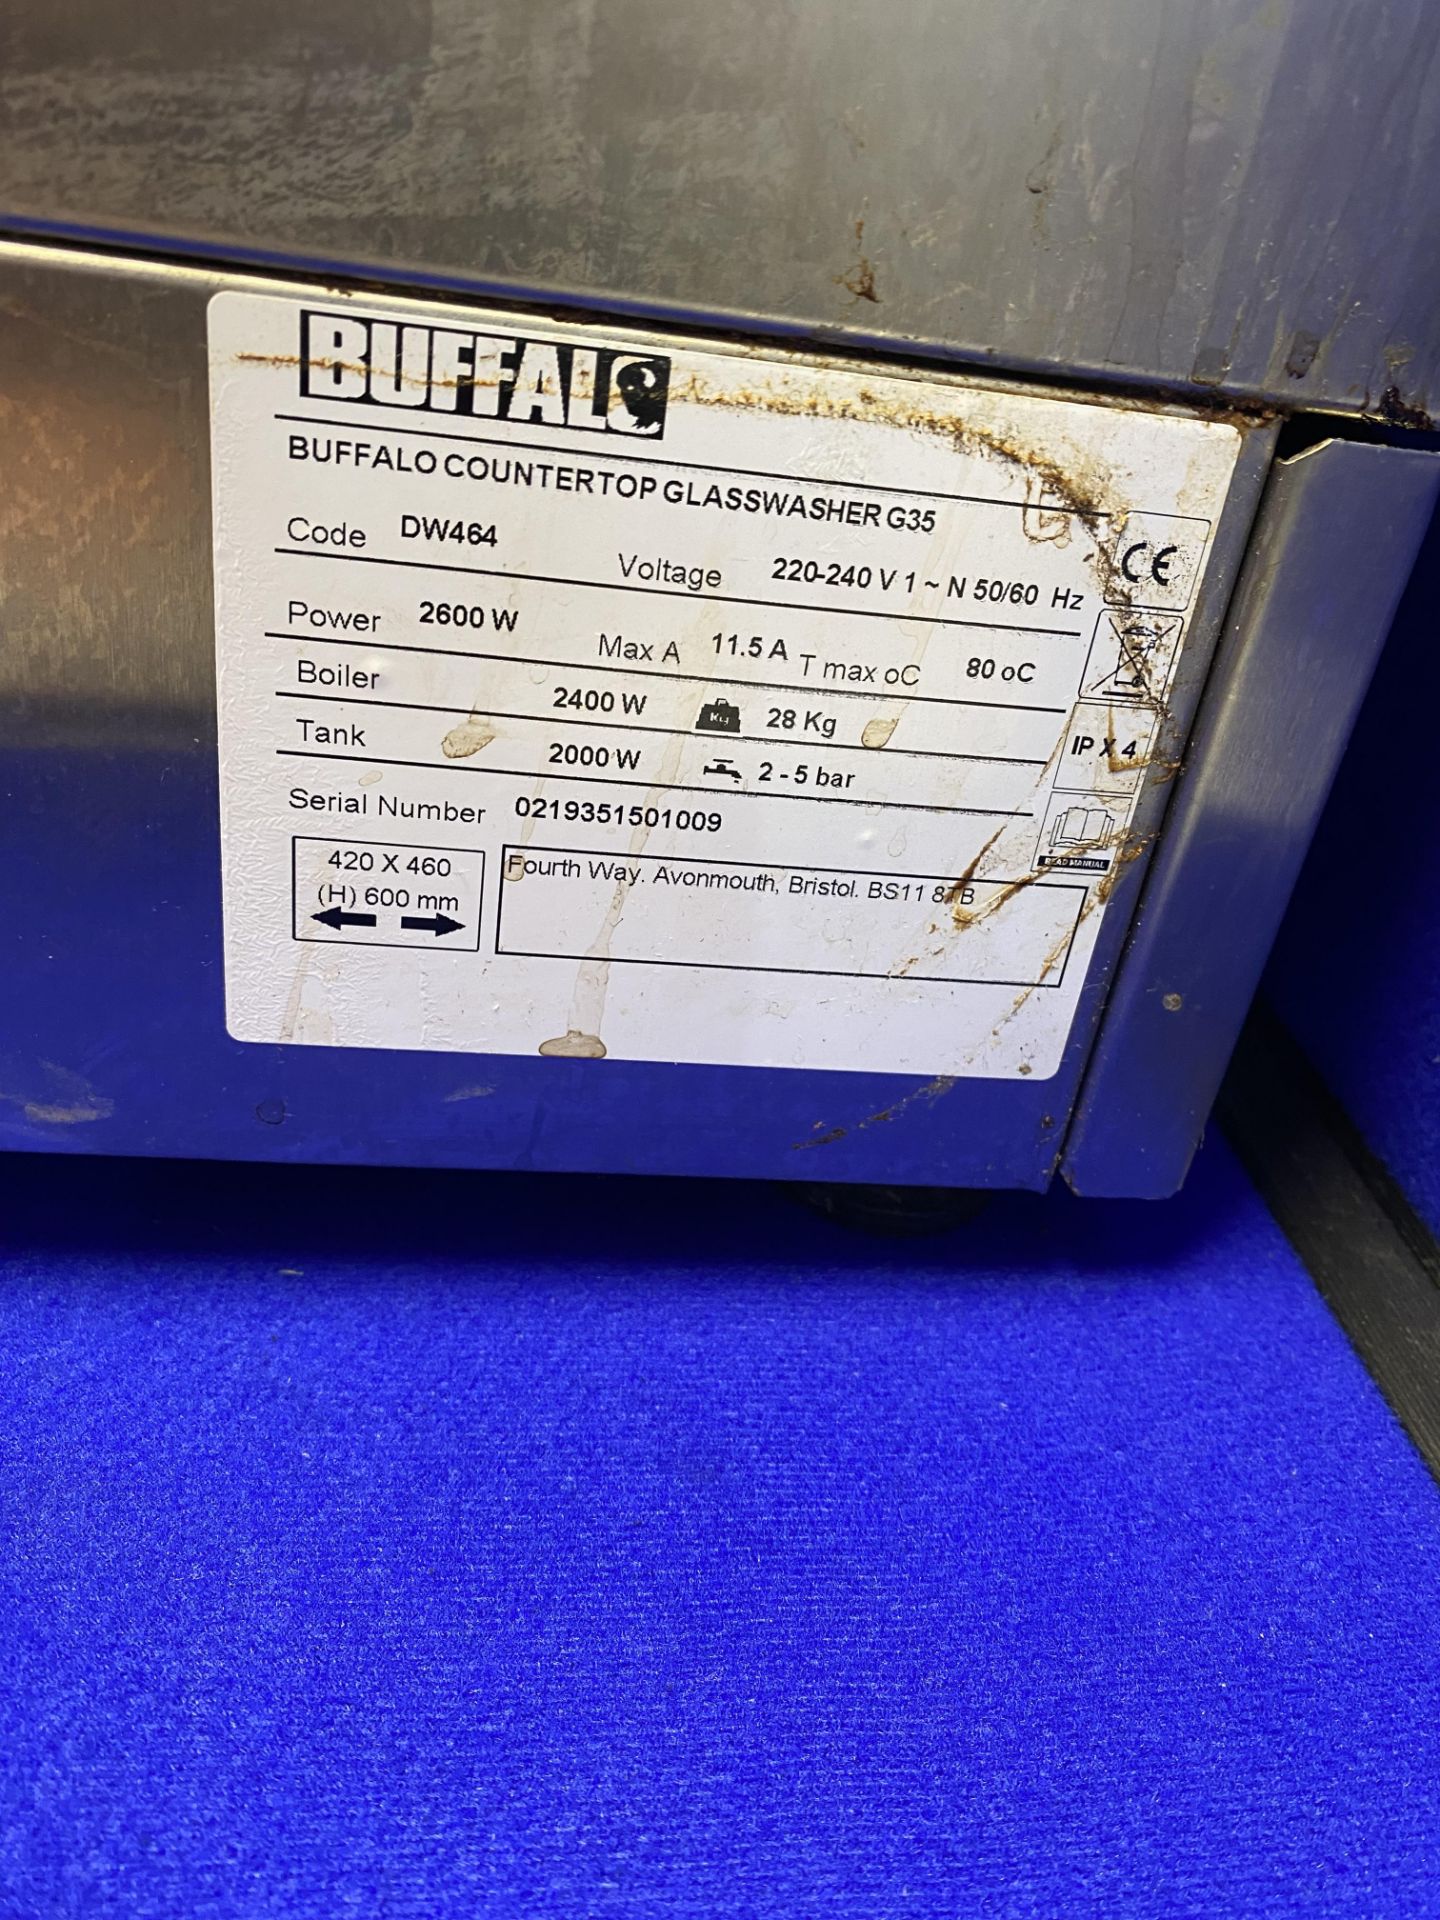 Buffalo G35 Countertop Glasswasher - Image 10 of 10